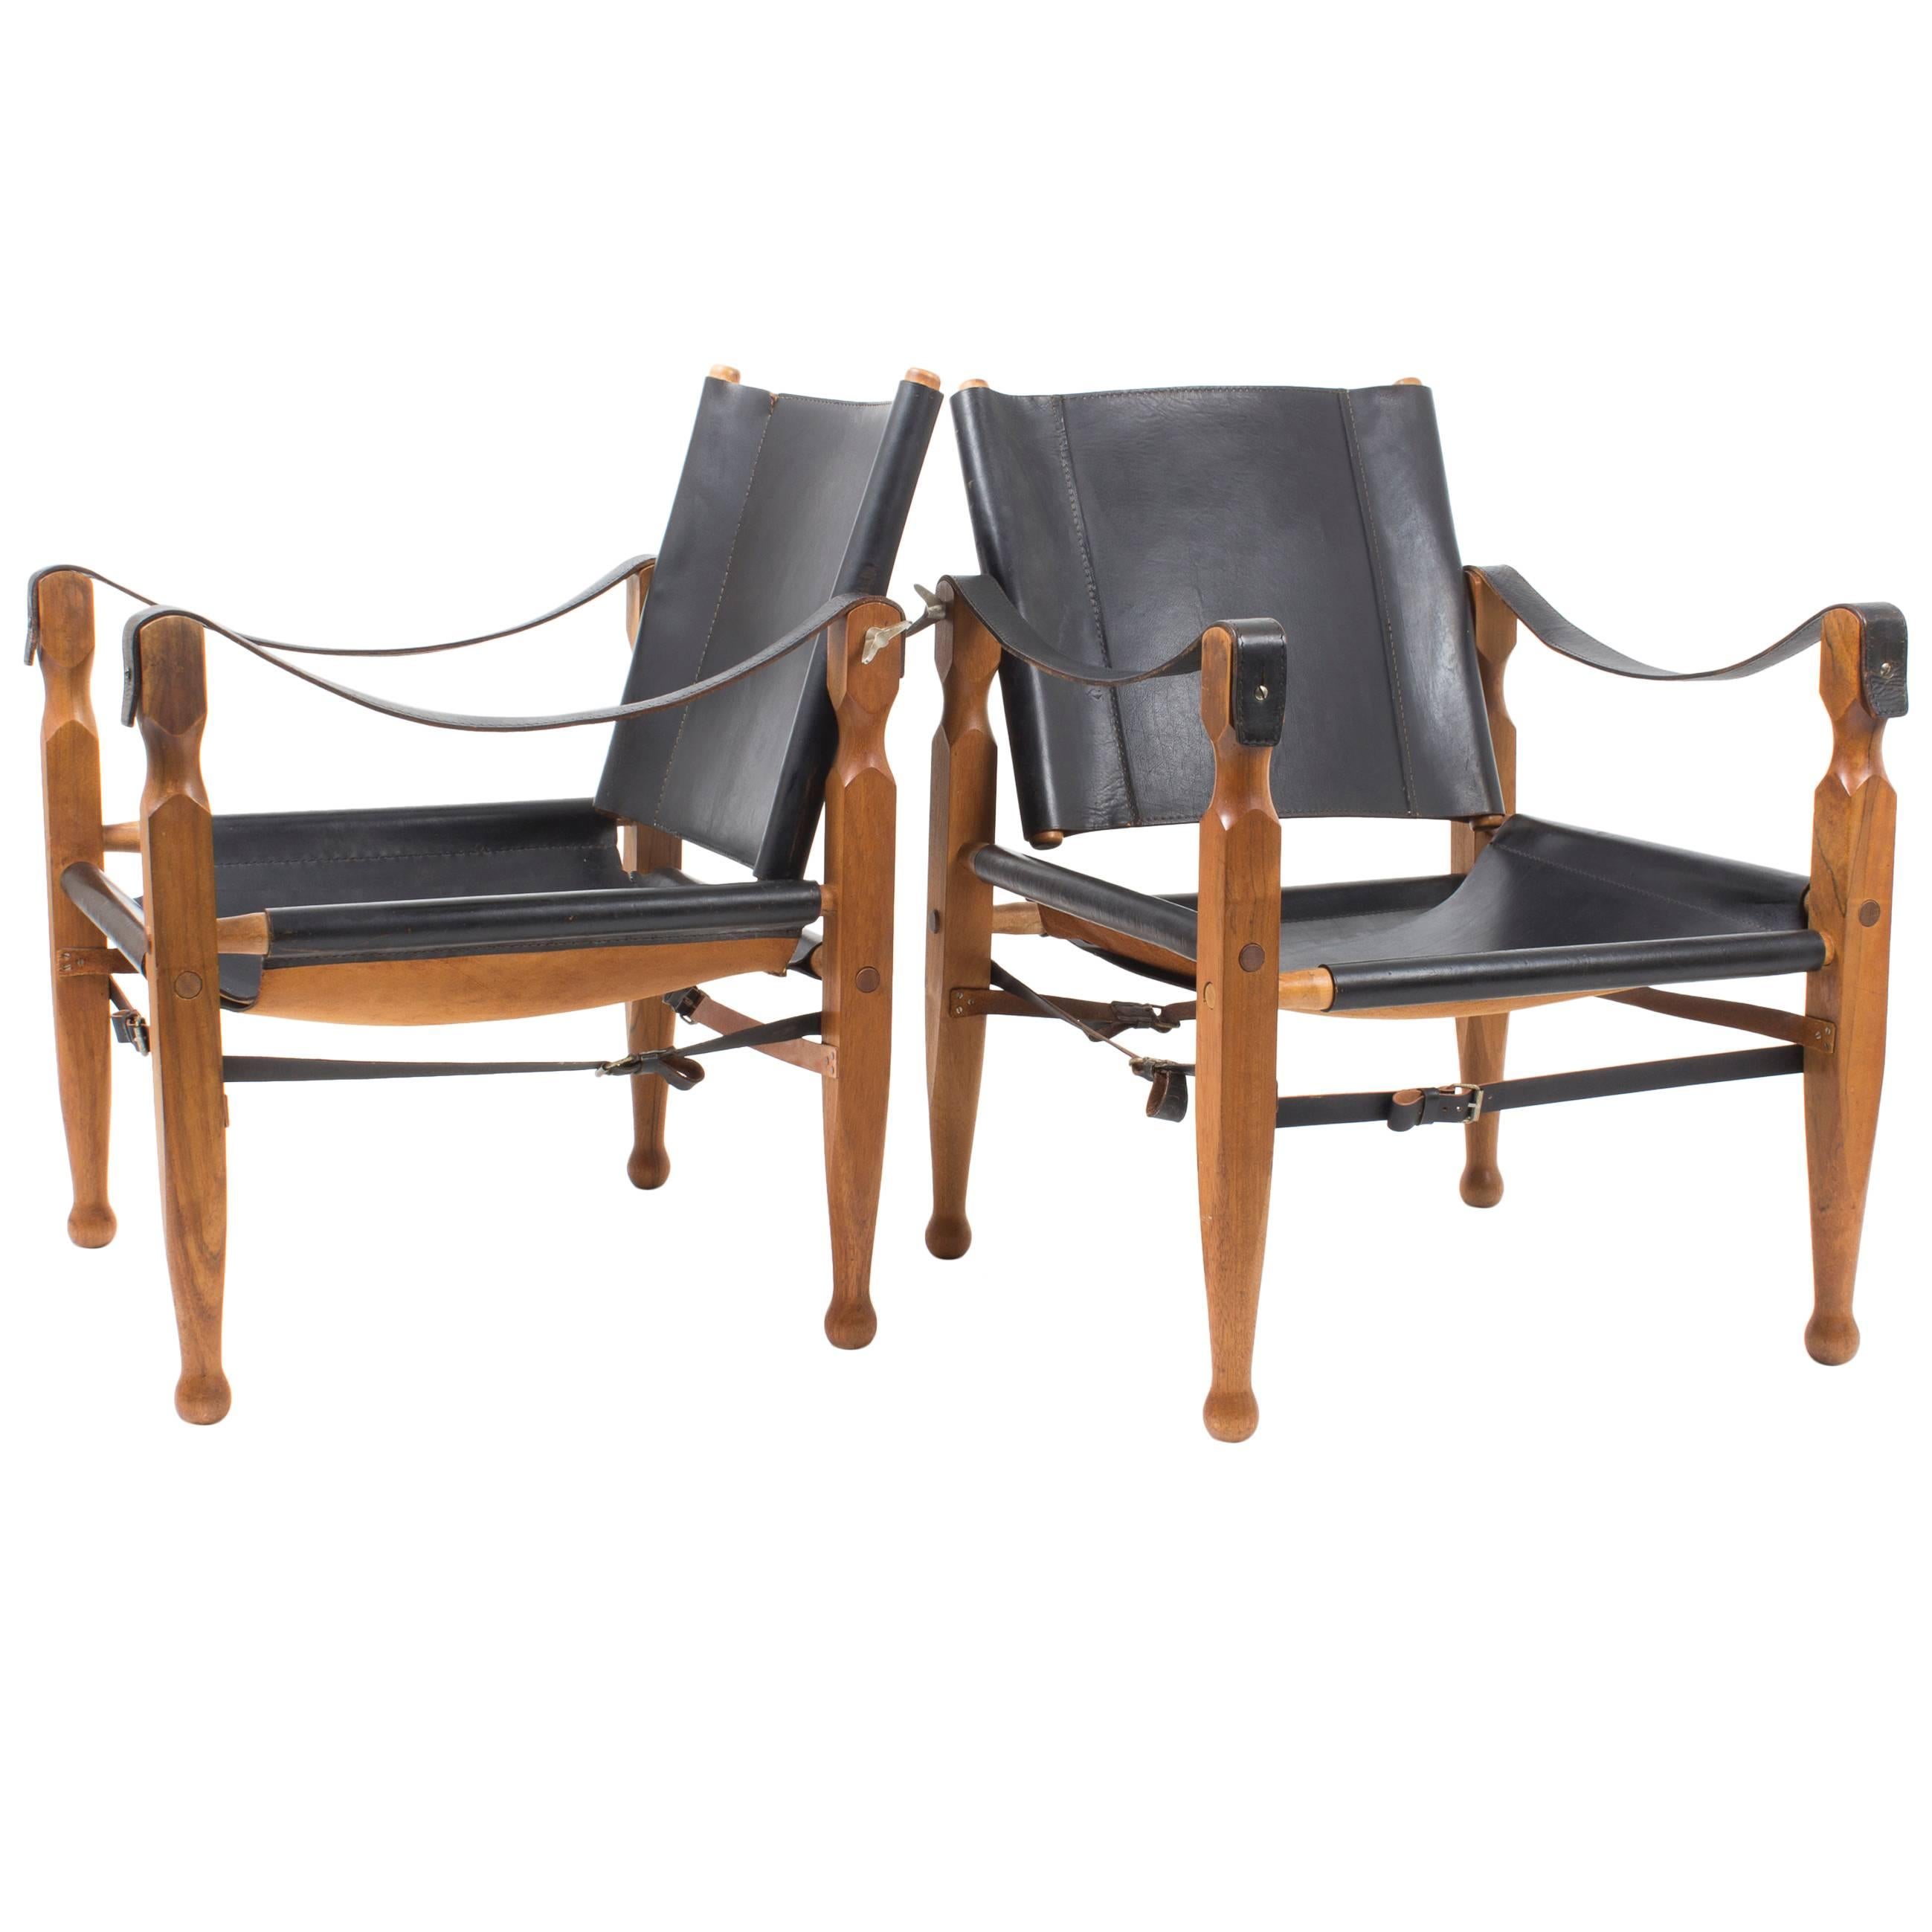 Rare Pair of Mint Black Carl Auböck Safari Chairs, Designed in 1950s For Sale